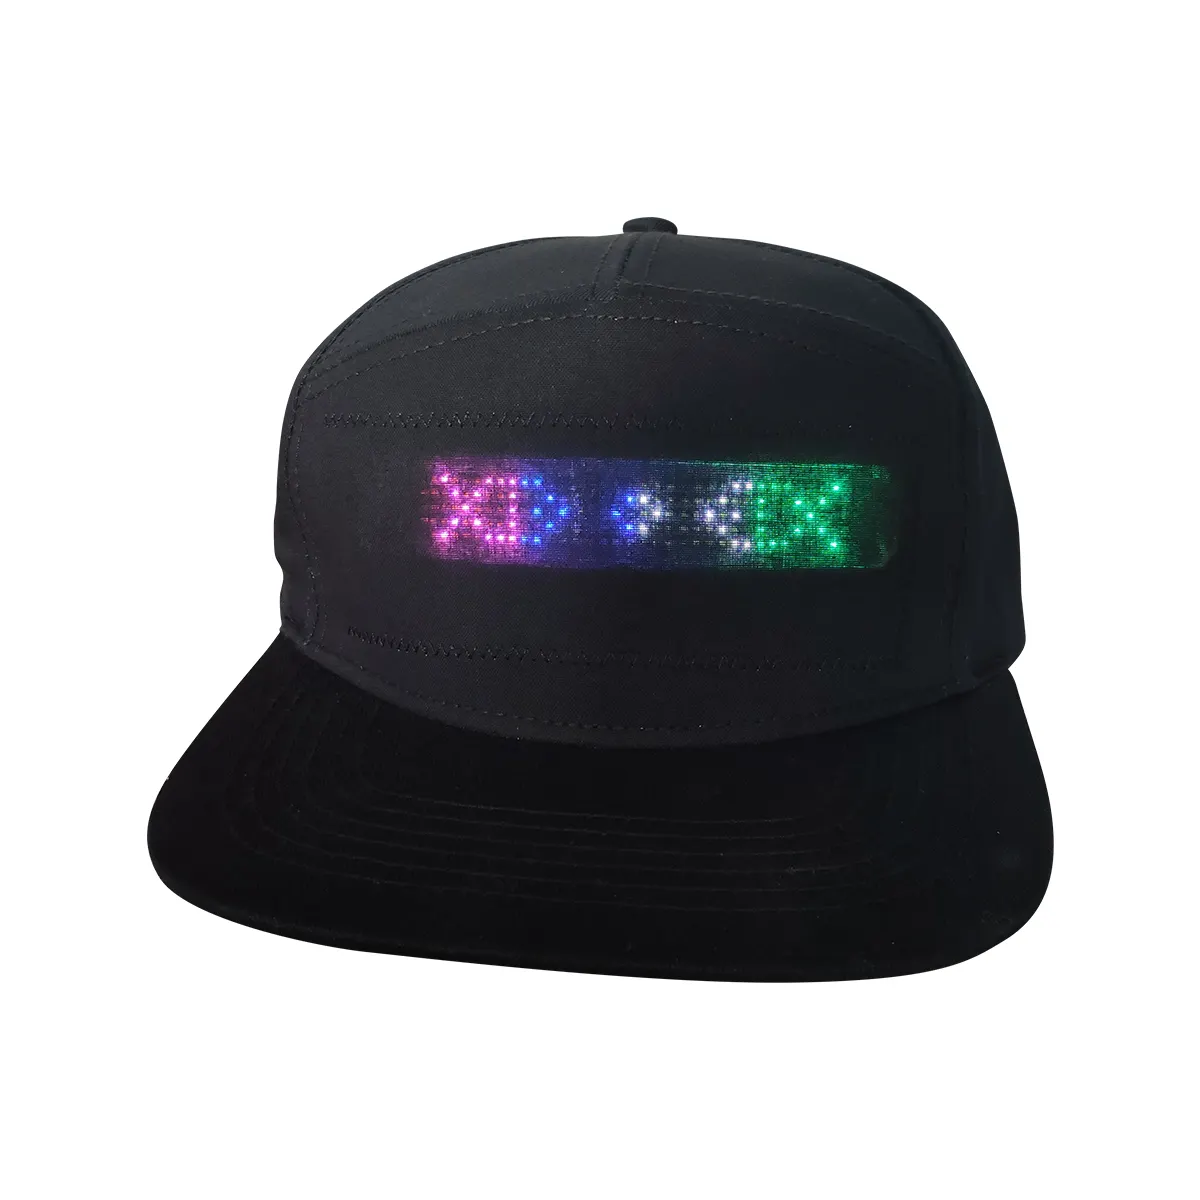 Mobile connects  LED cap controlled by APP  luminous colors cap